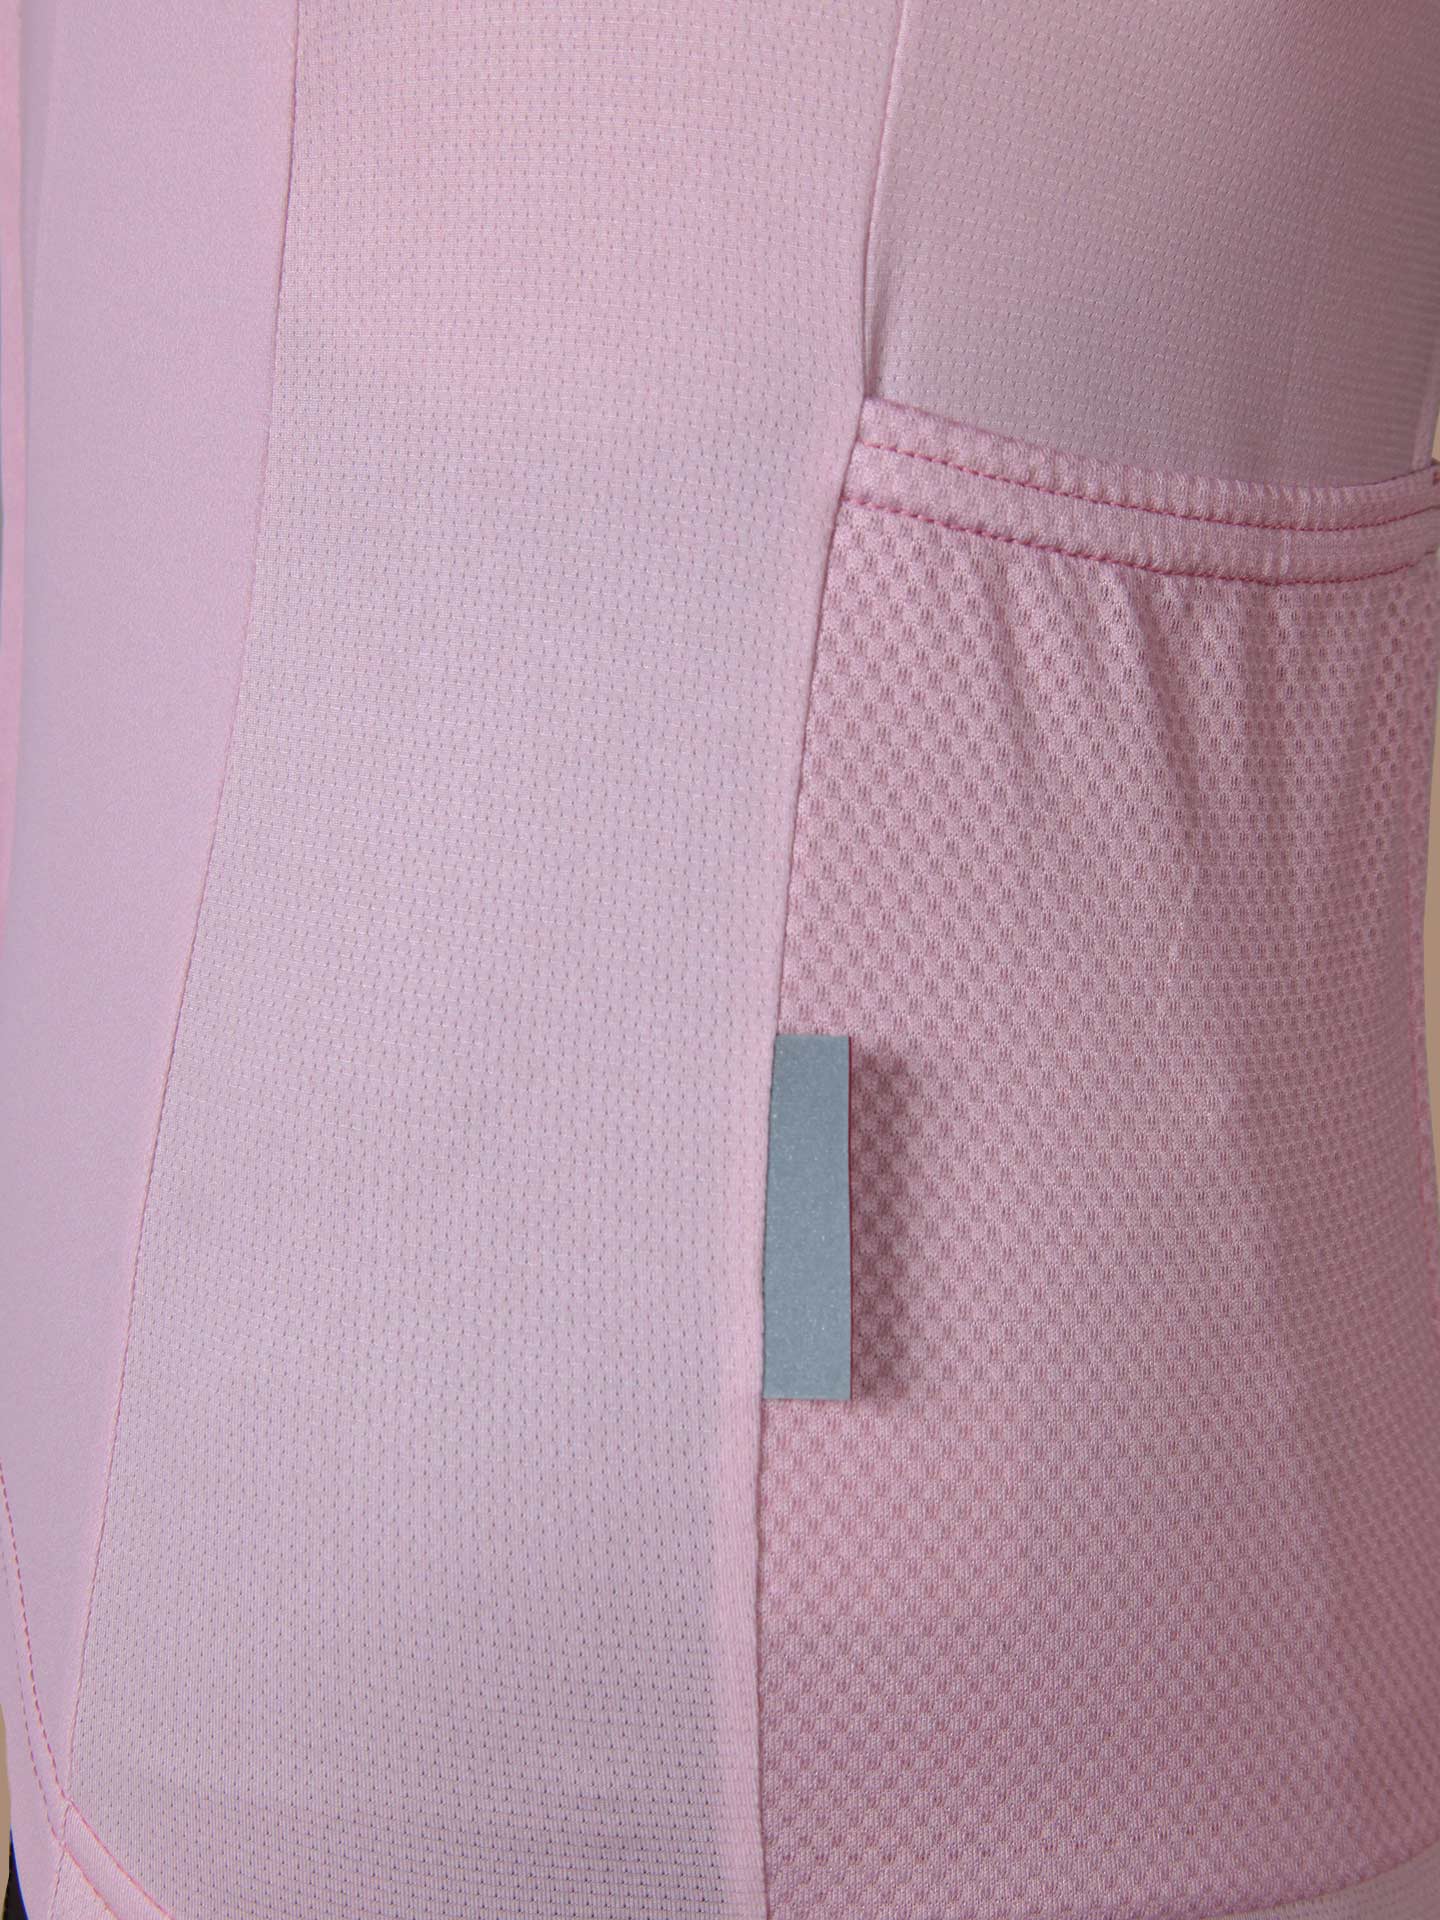 NGNM Stripes Rose quartz pocket reflective band super breathable fabric